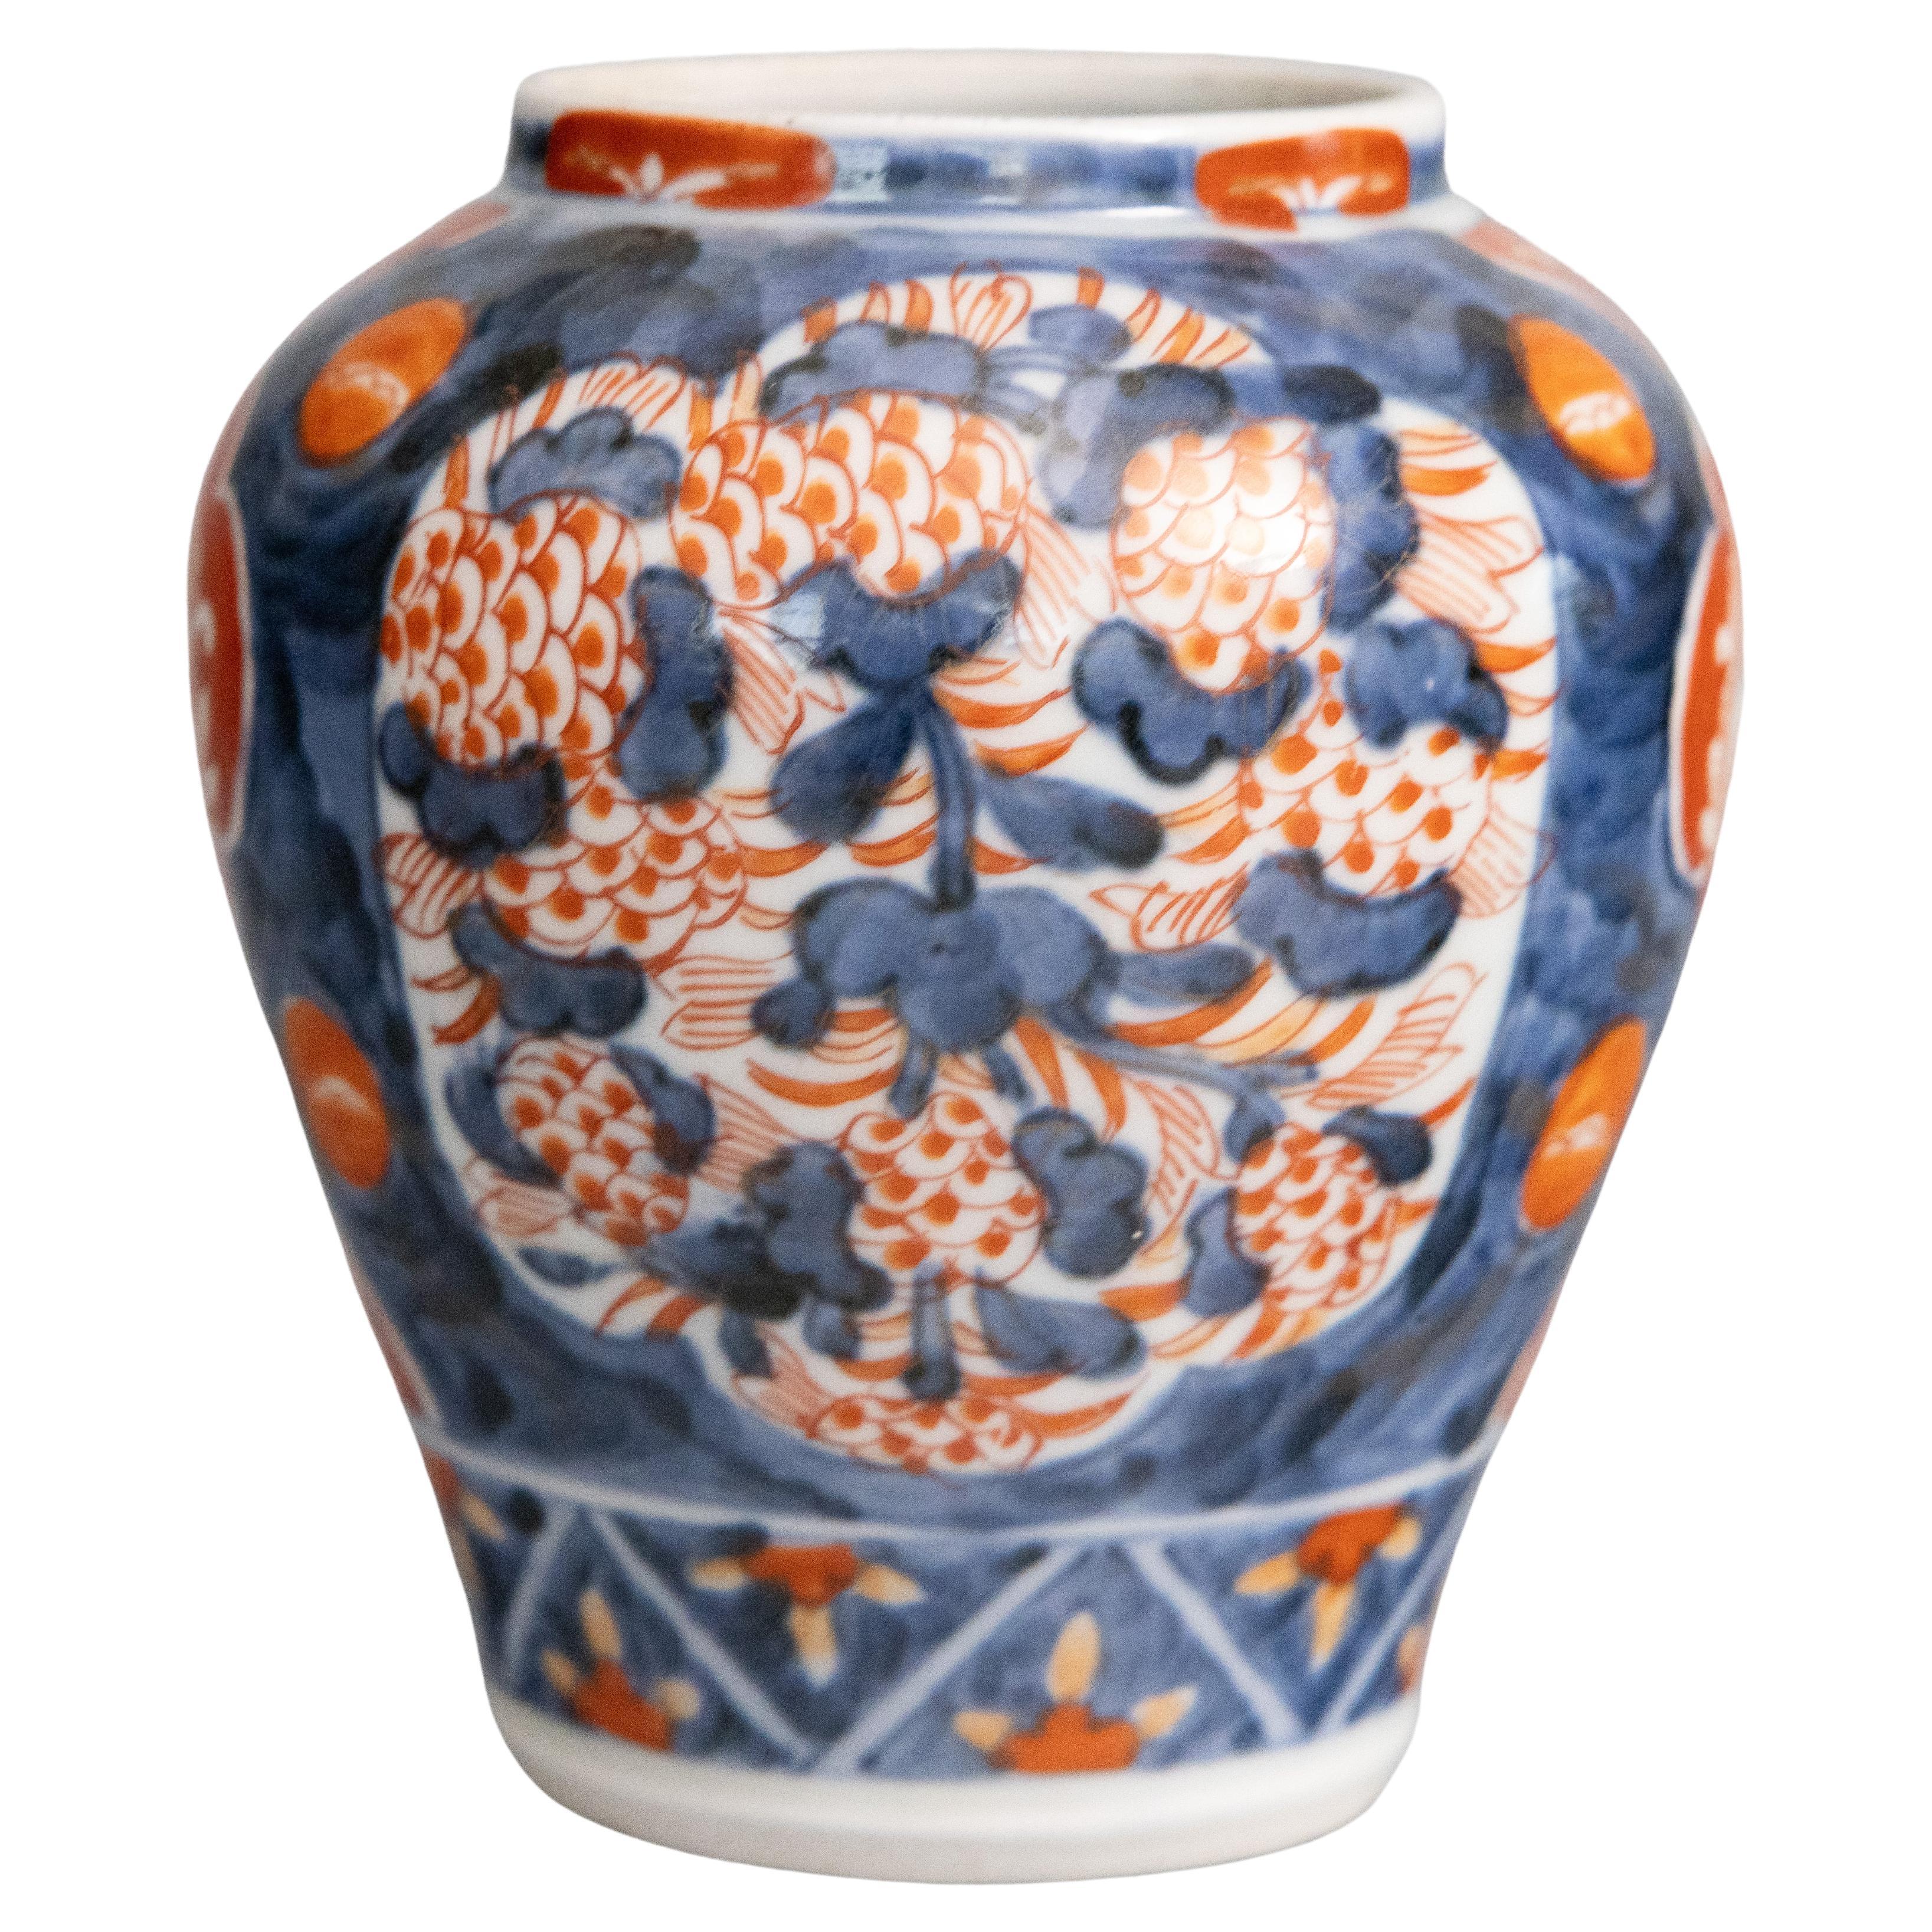 Antique 19th Century Japanese Imari Porcelain Vase/Brush Pot